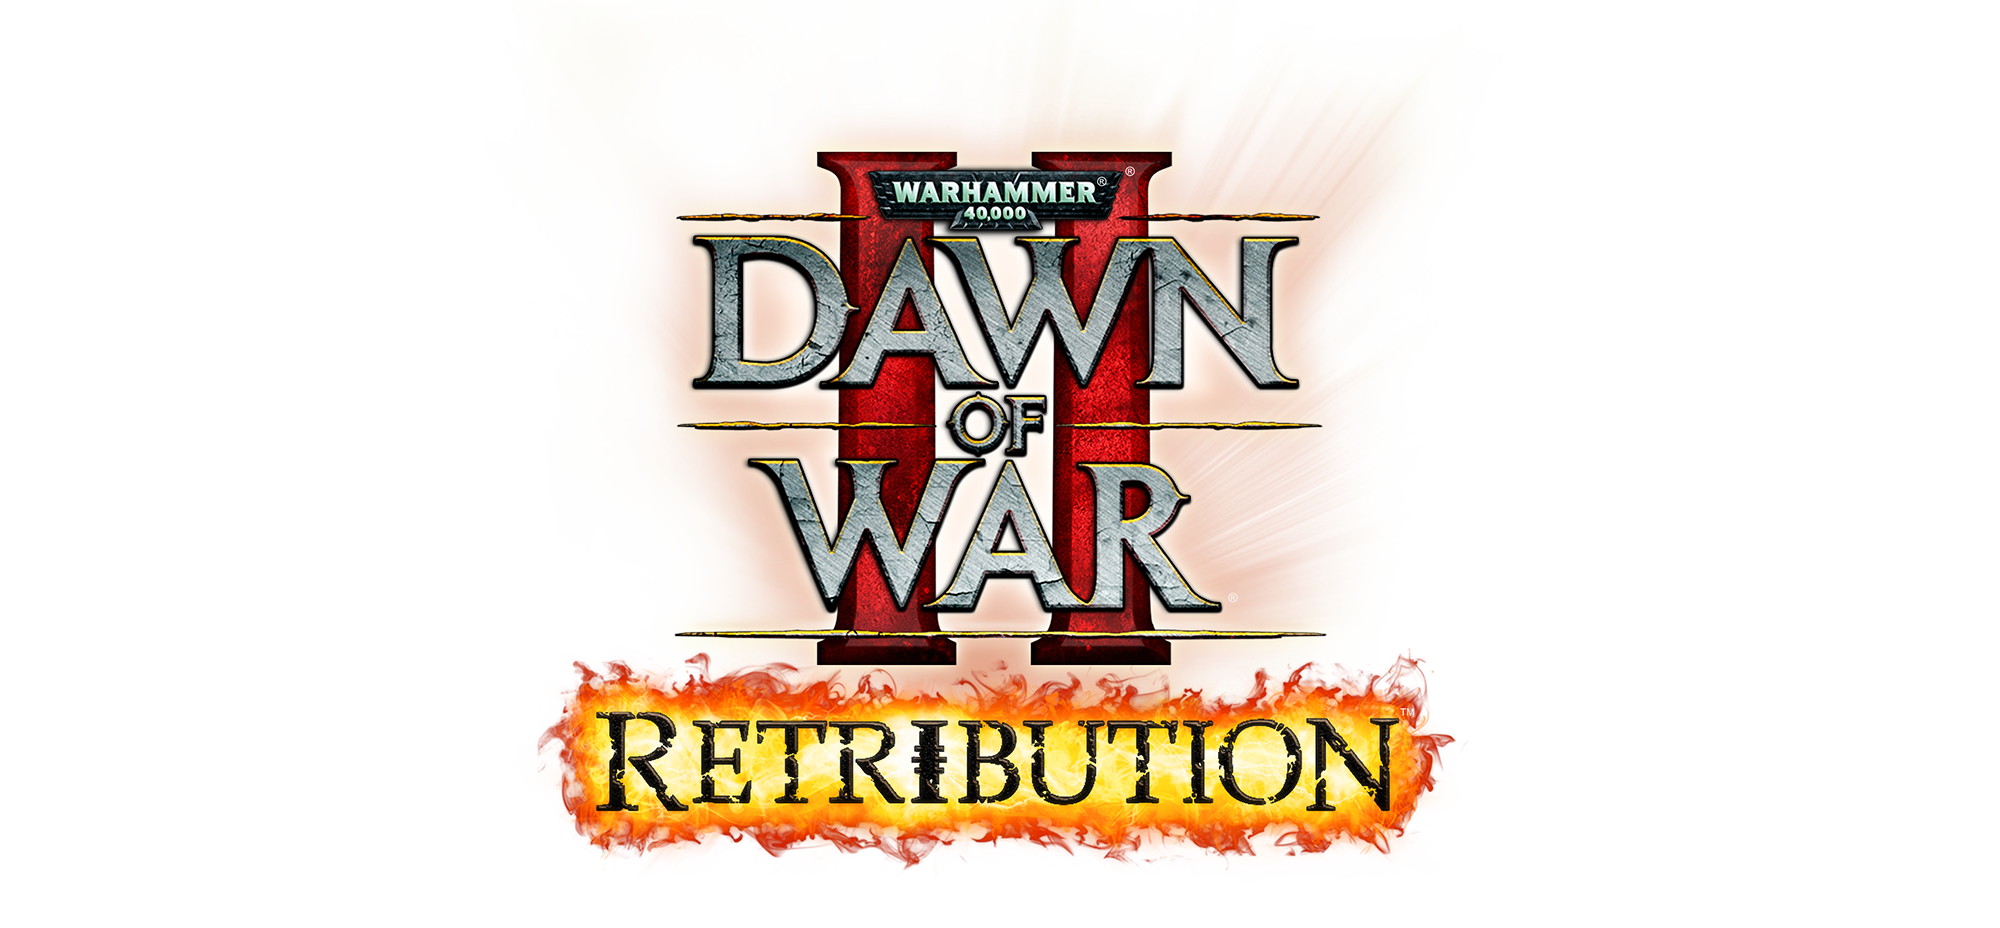 Dawn of War Logo PNG Transparent Image